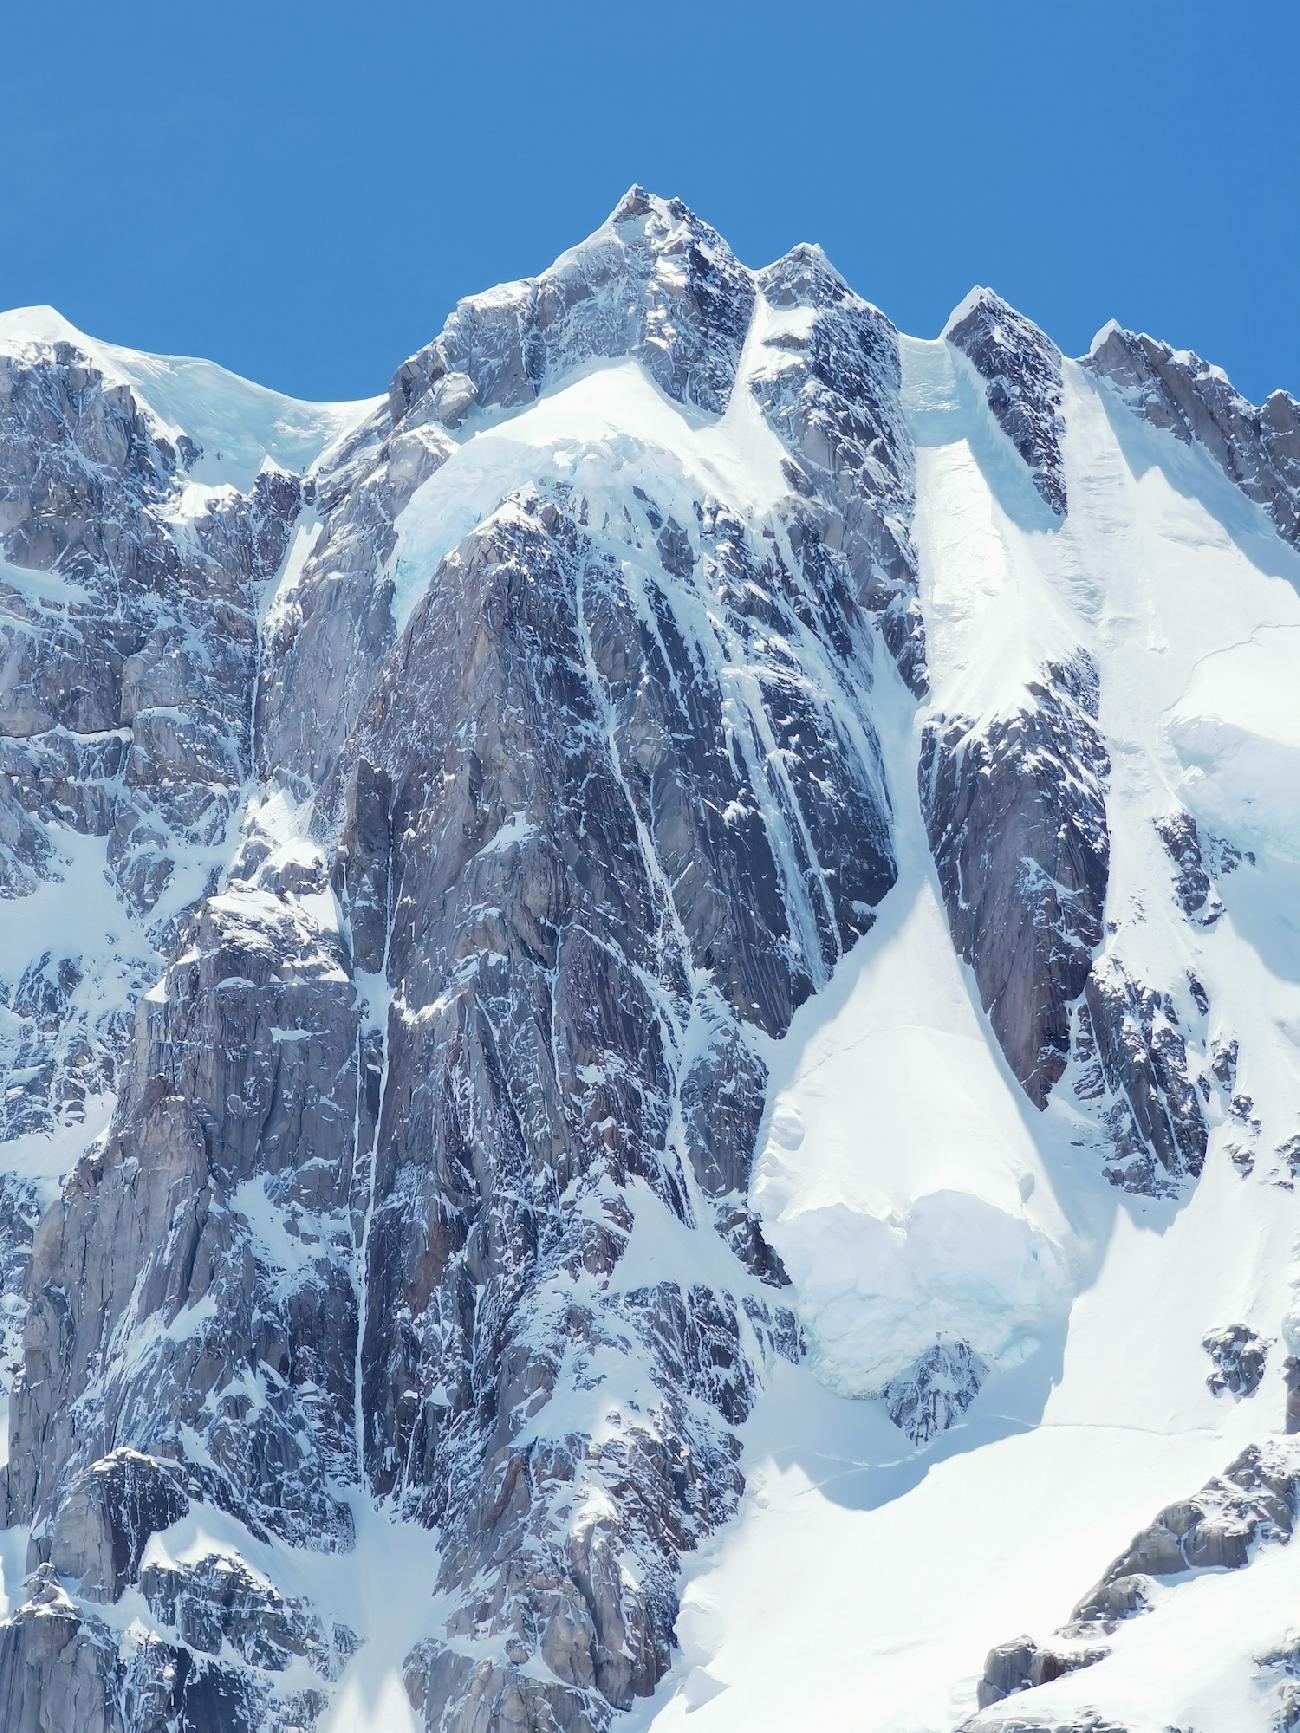 Cerro Nora Oeste, Patagonie, Paolo Marazzi, Luca Schiera - Paolo Marazzi et Luca Schiera réalisent la première ascension du Cerro Nora Oeste en Patagonie